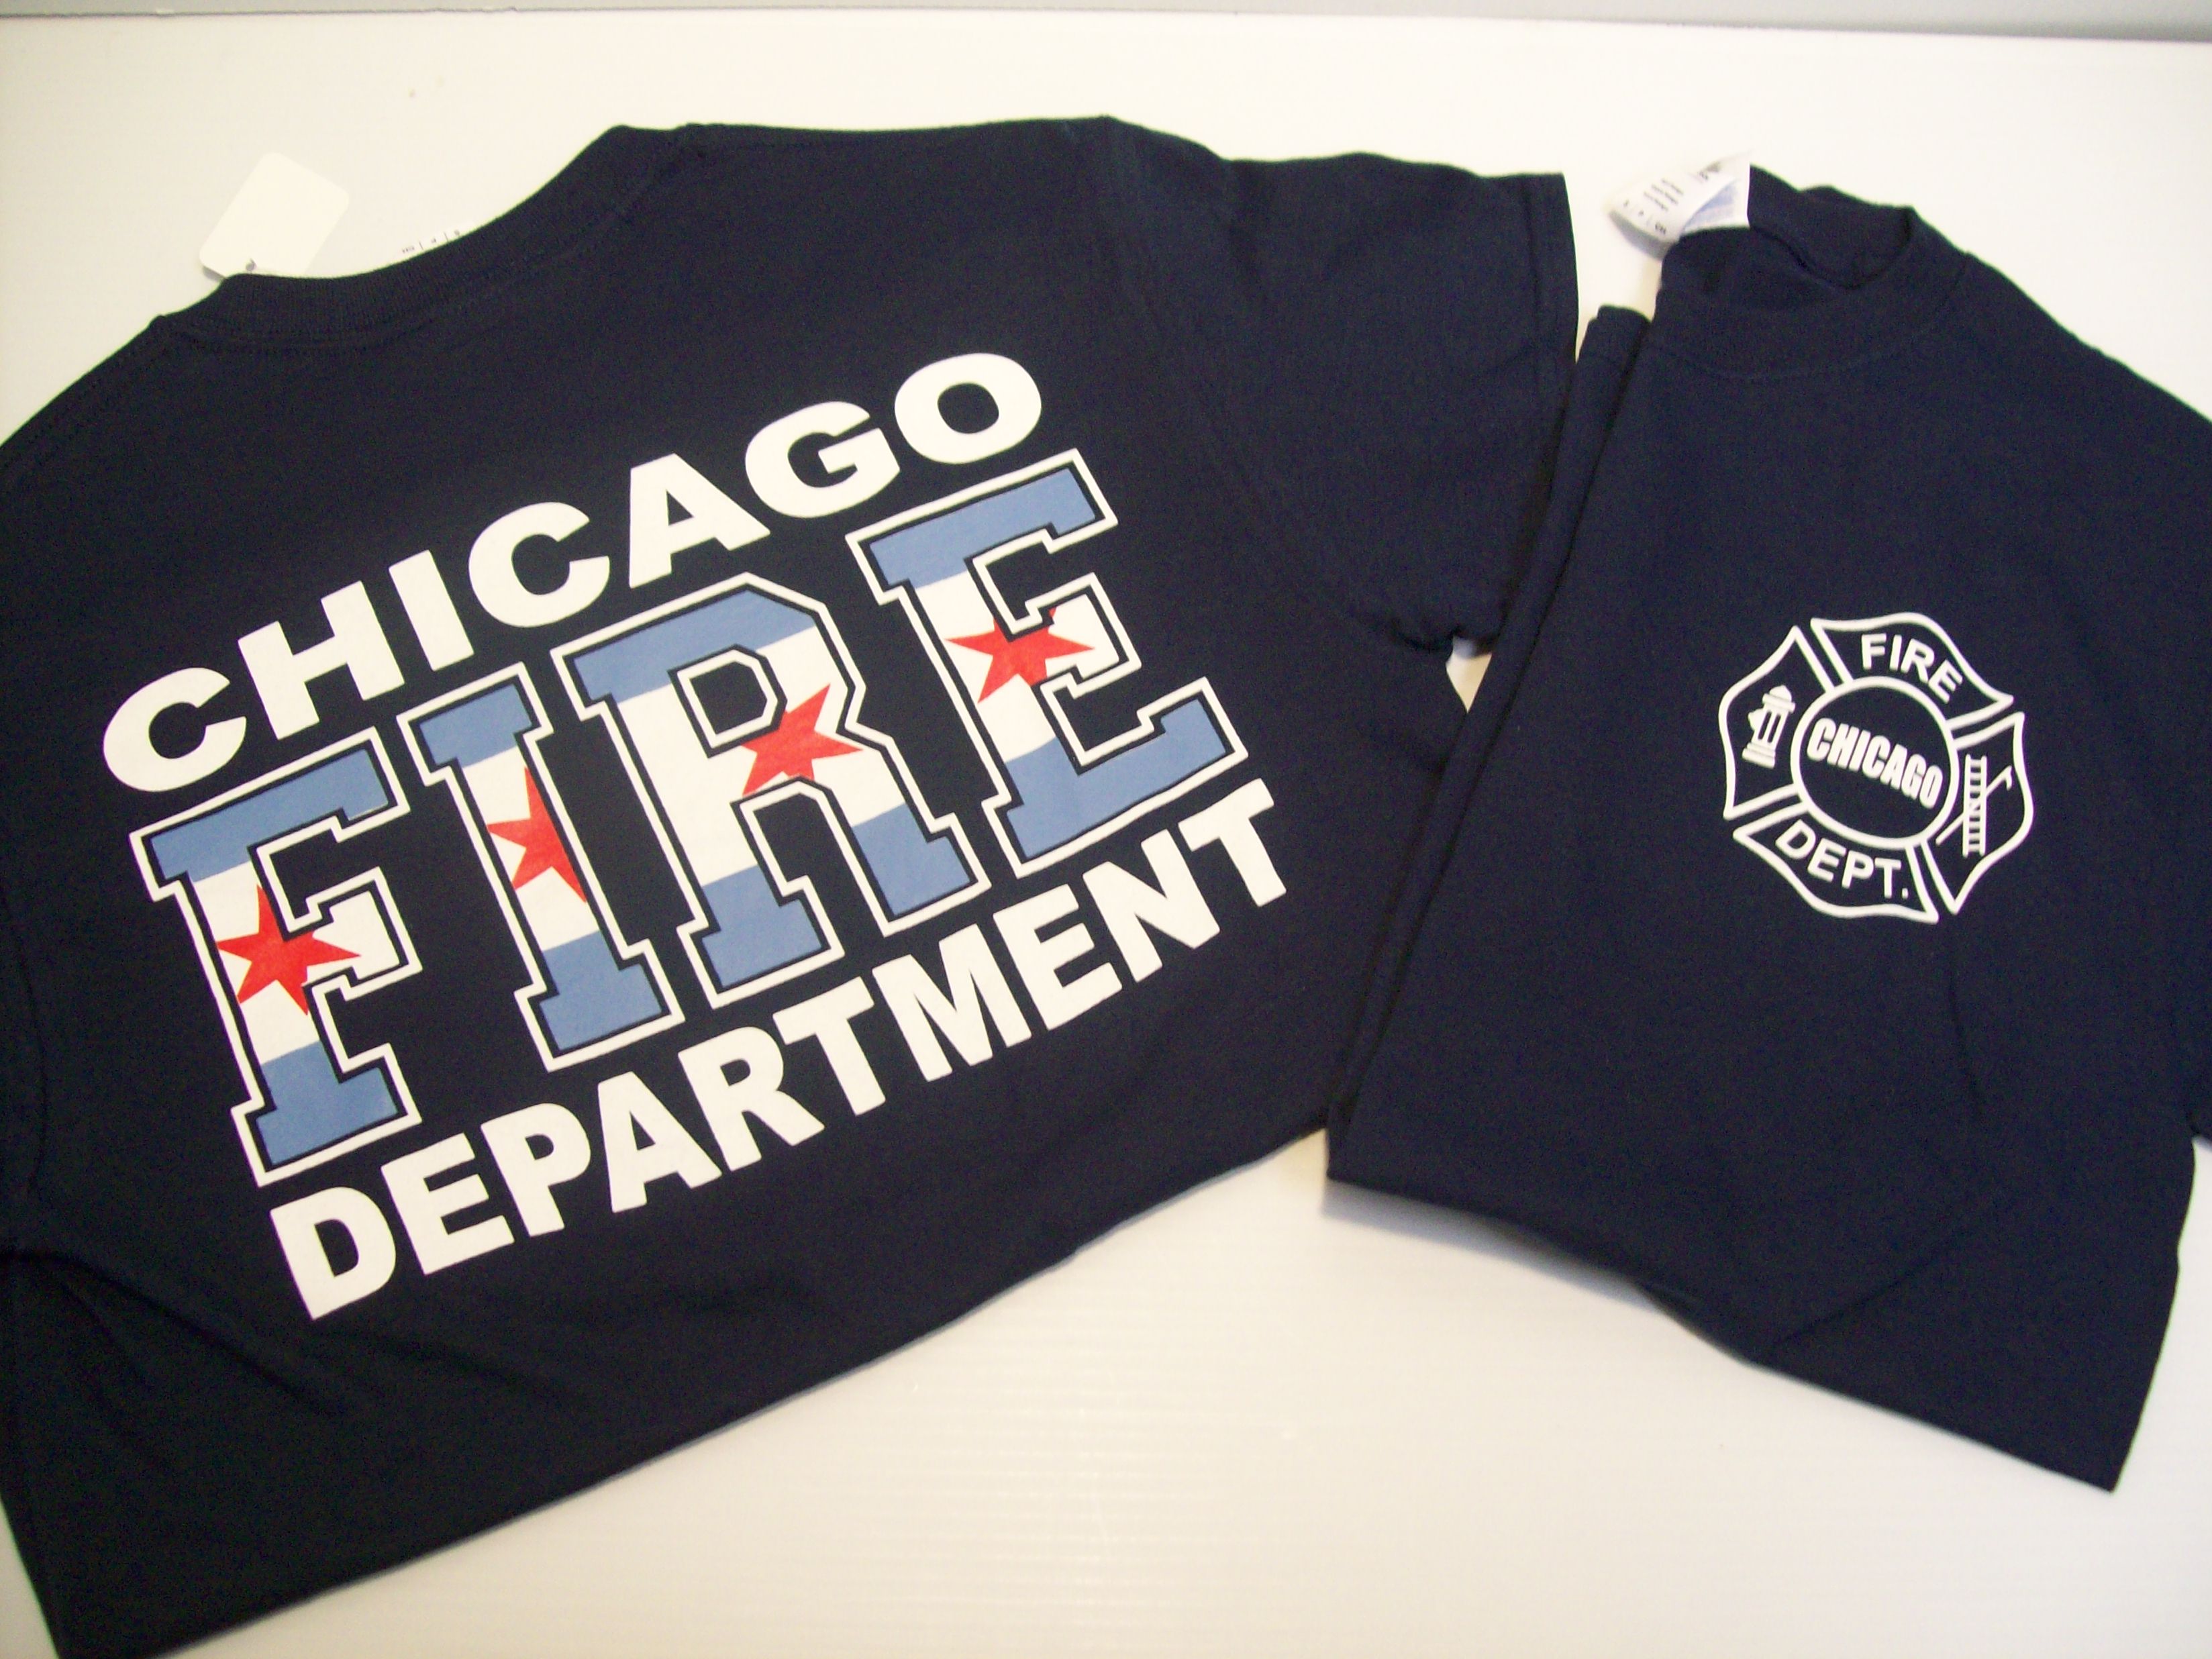  Chicago Flag Tshirt  Original Graphic Design Novelty